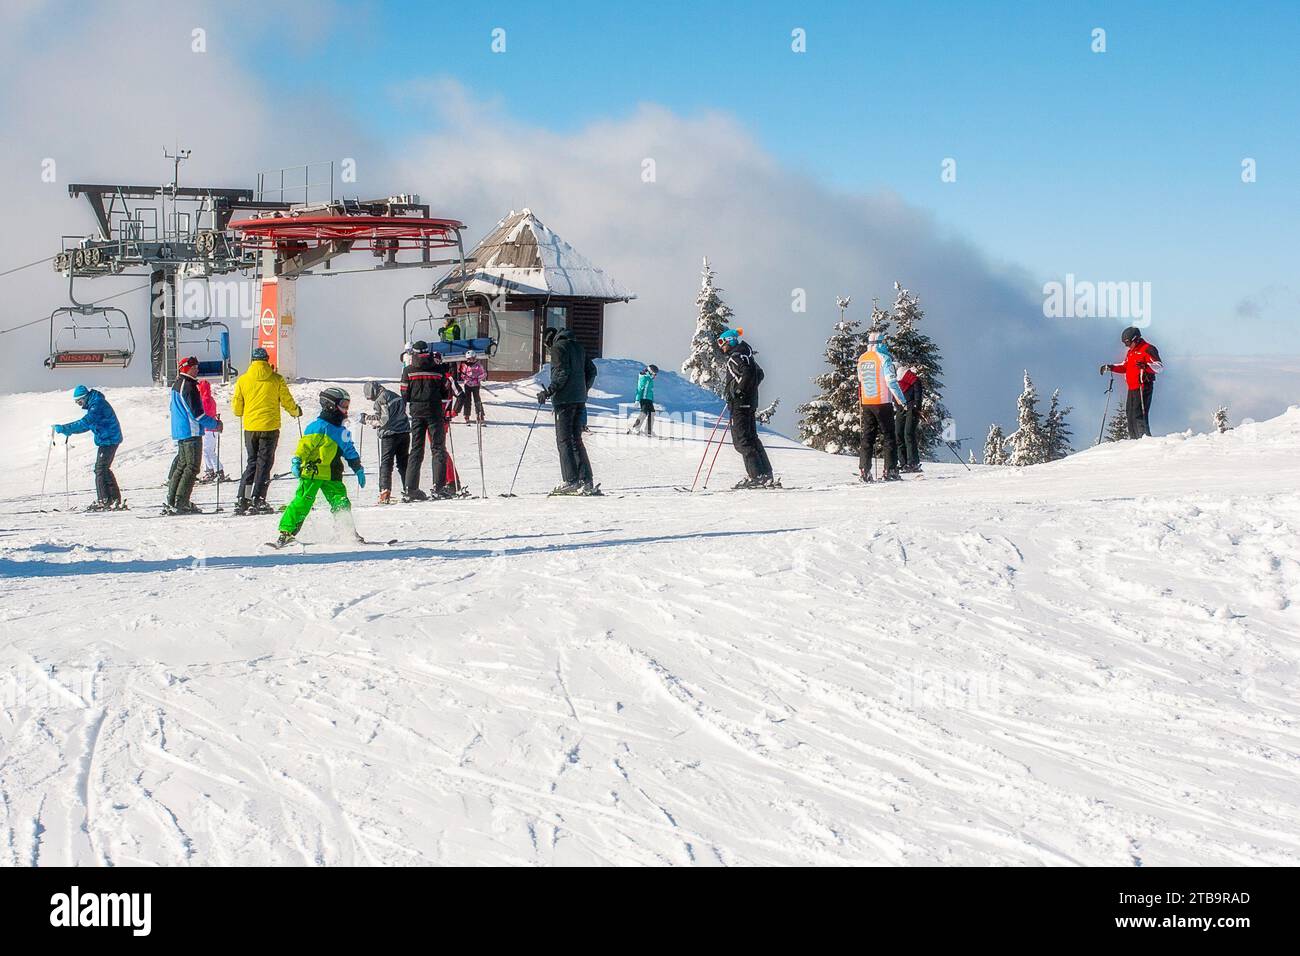 Kopaonik, Serbia - January 22, 2016: Ski resort Kopaonik, Serbia, ski lift, ski slope, people skiing down from the lift Stock Photo